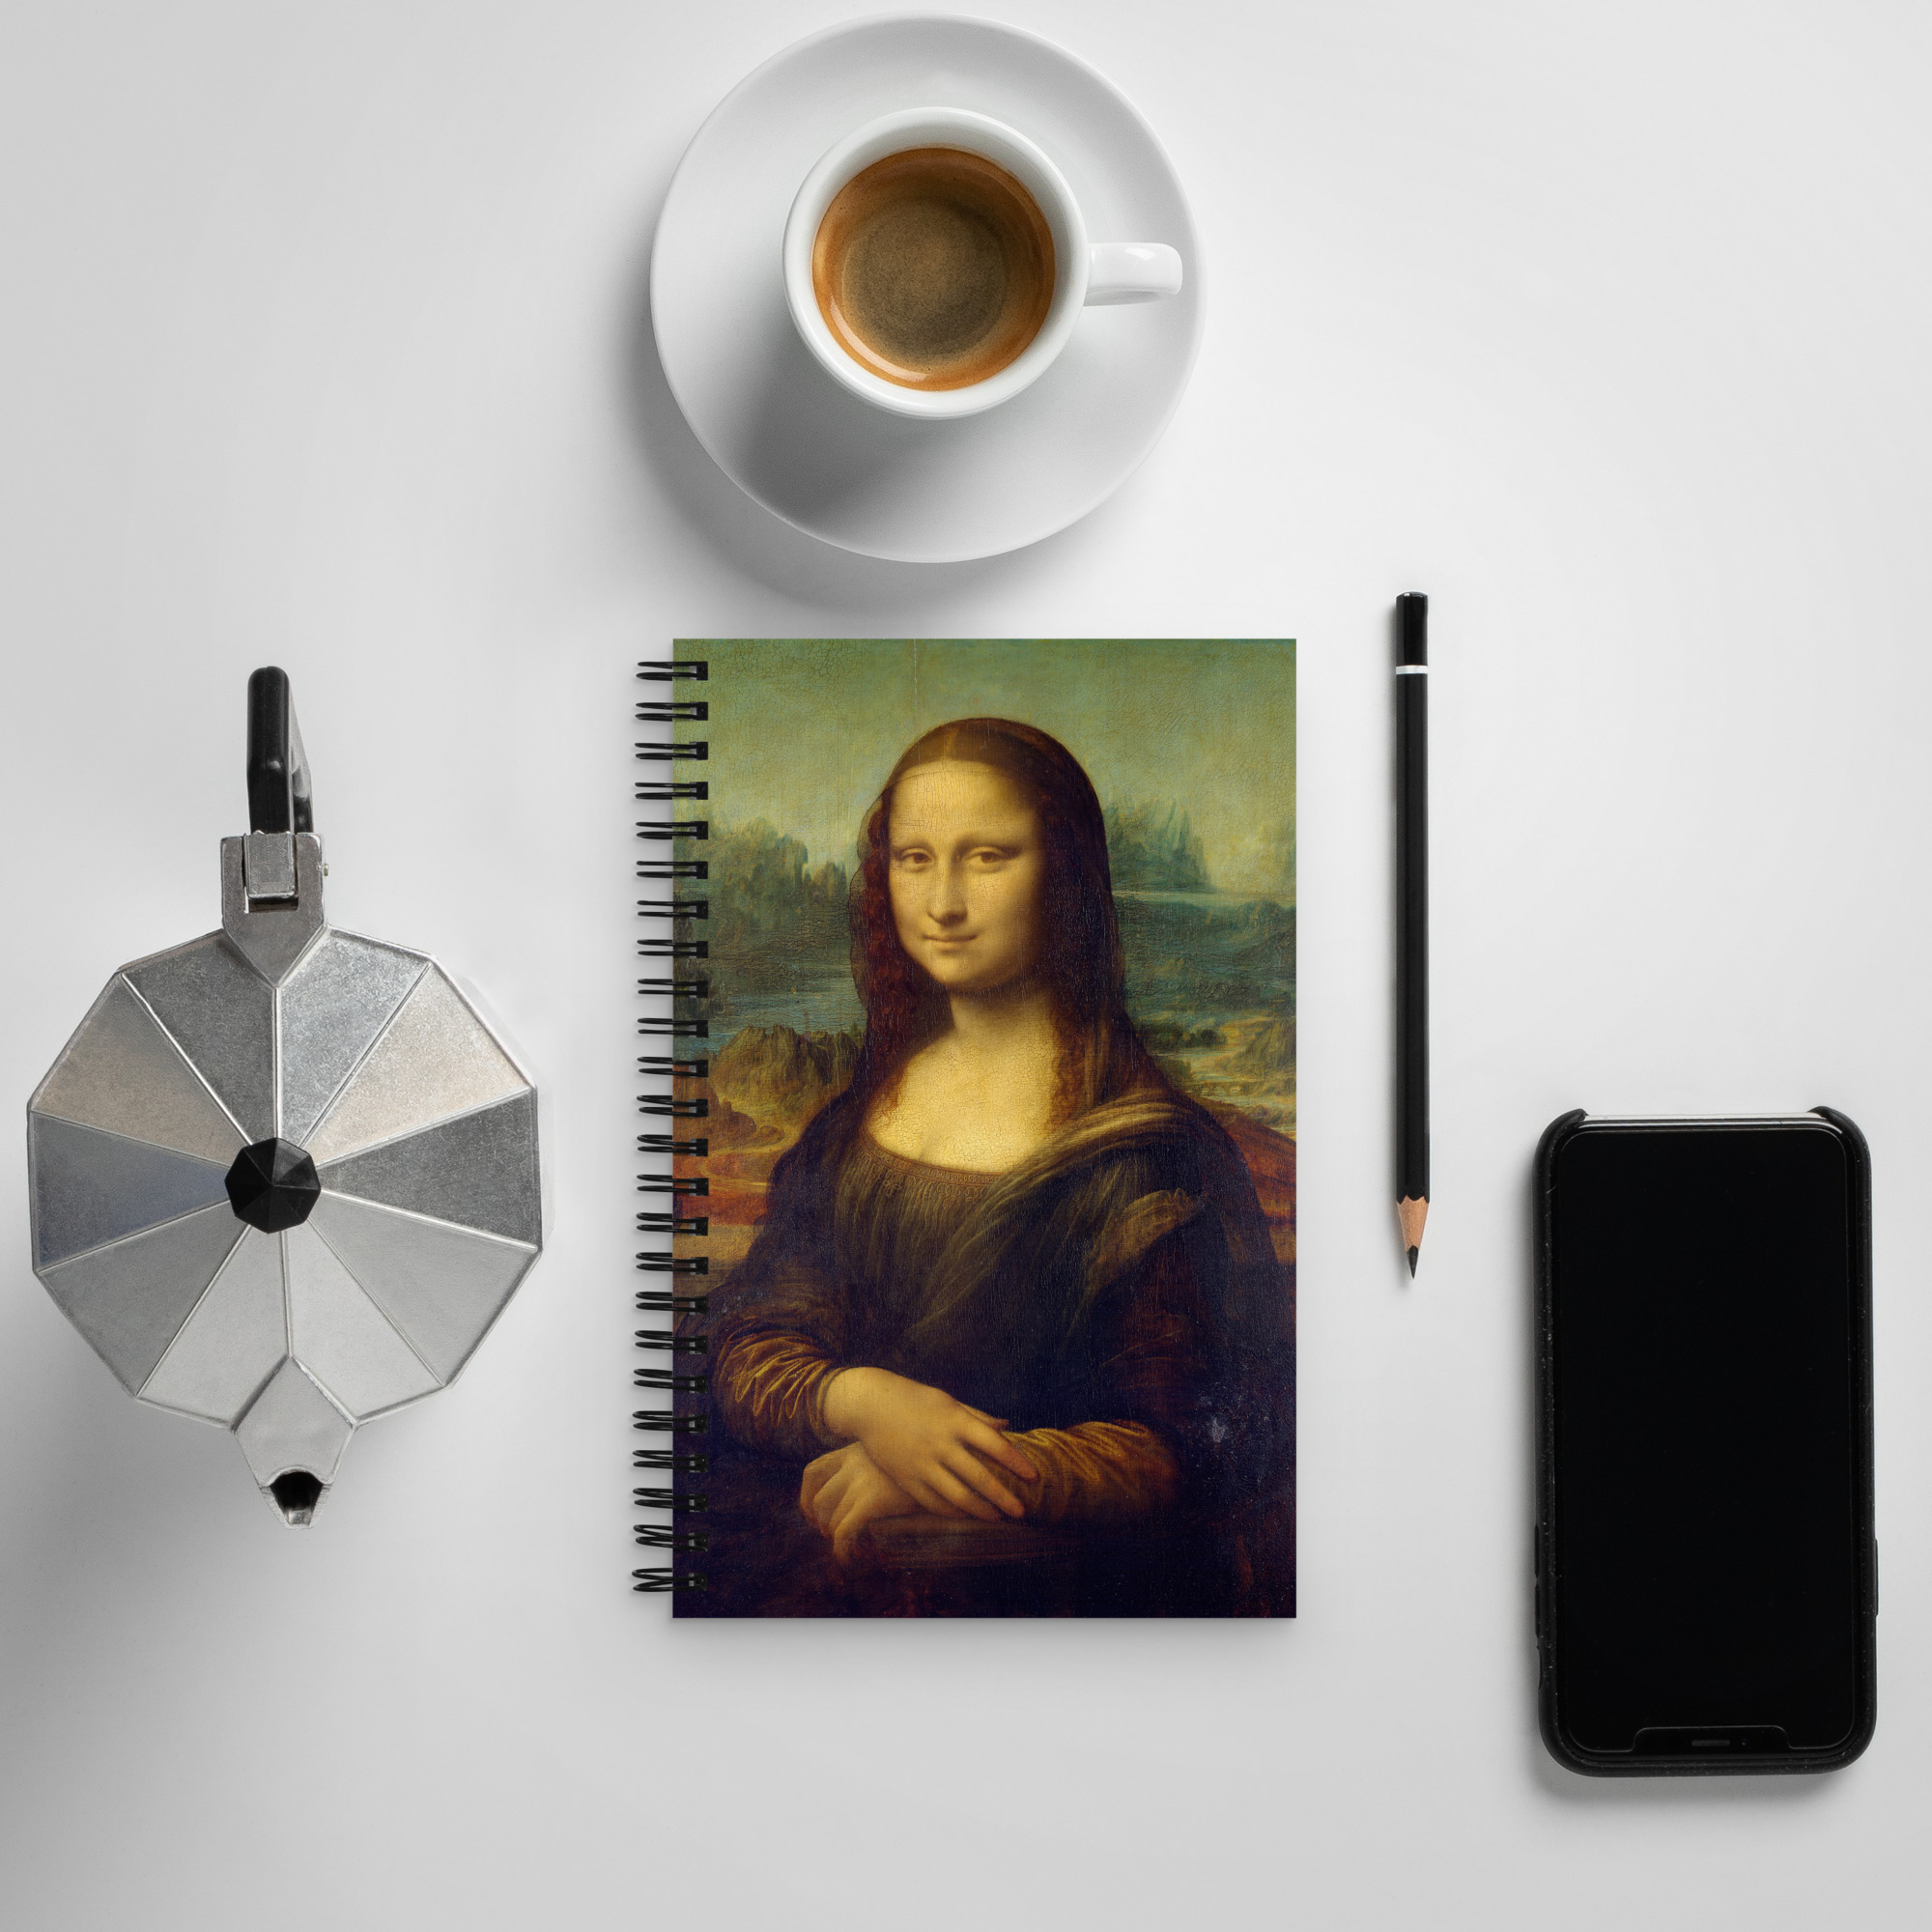 Mona Lisa by Leonardo da Vinci Spiral Notebook, Dark Academia, Gothic Art, Macabre